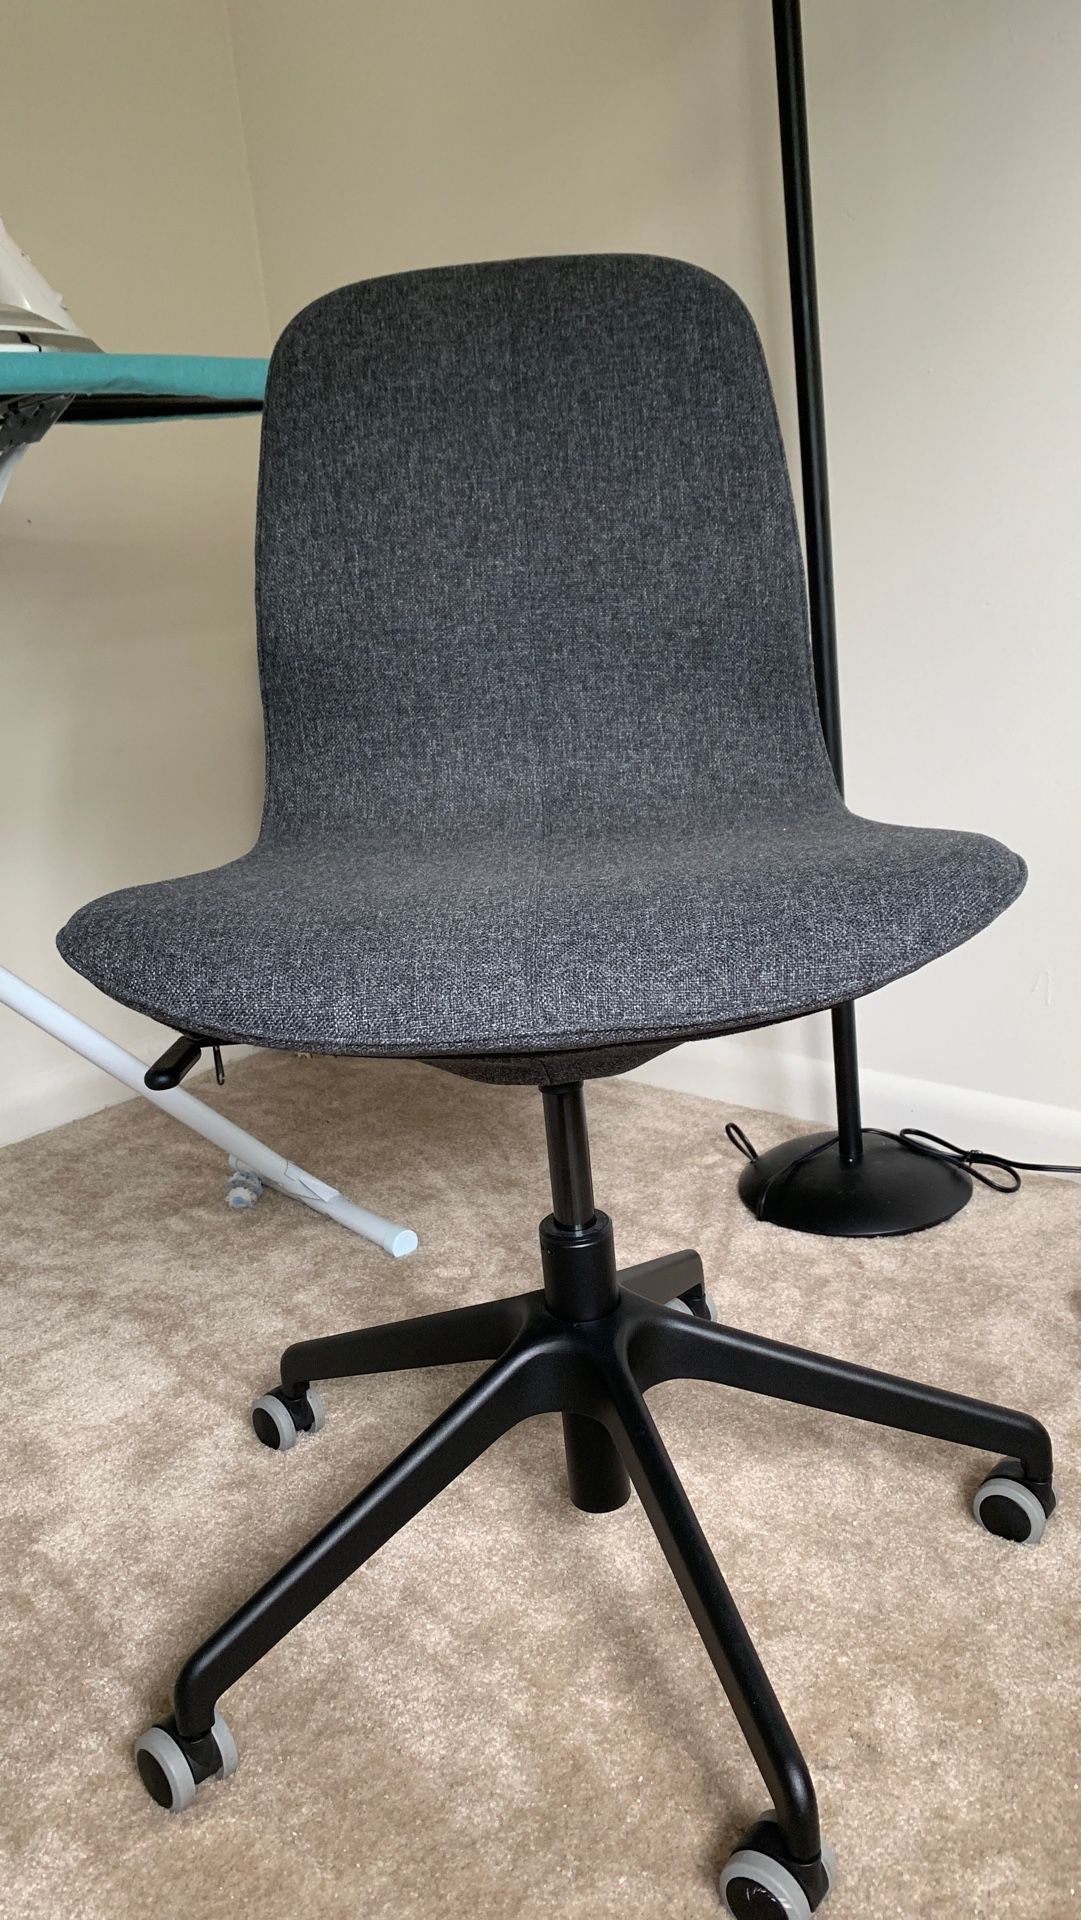 Medium computer chair IKEA never used